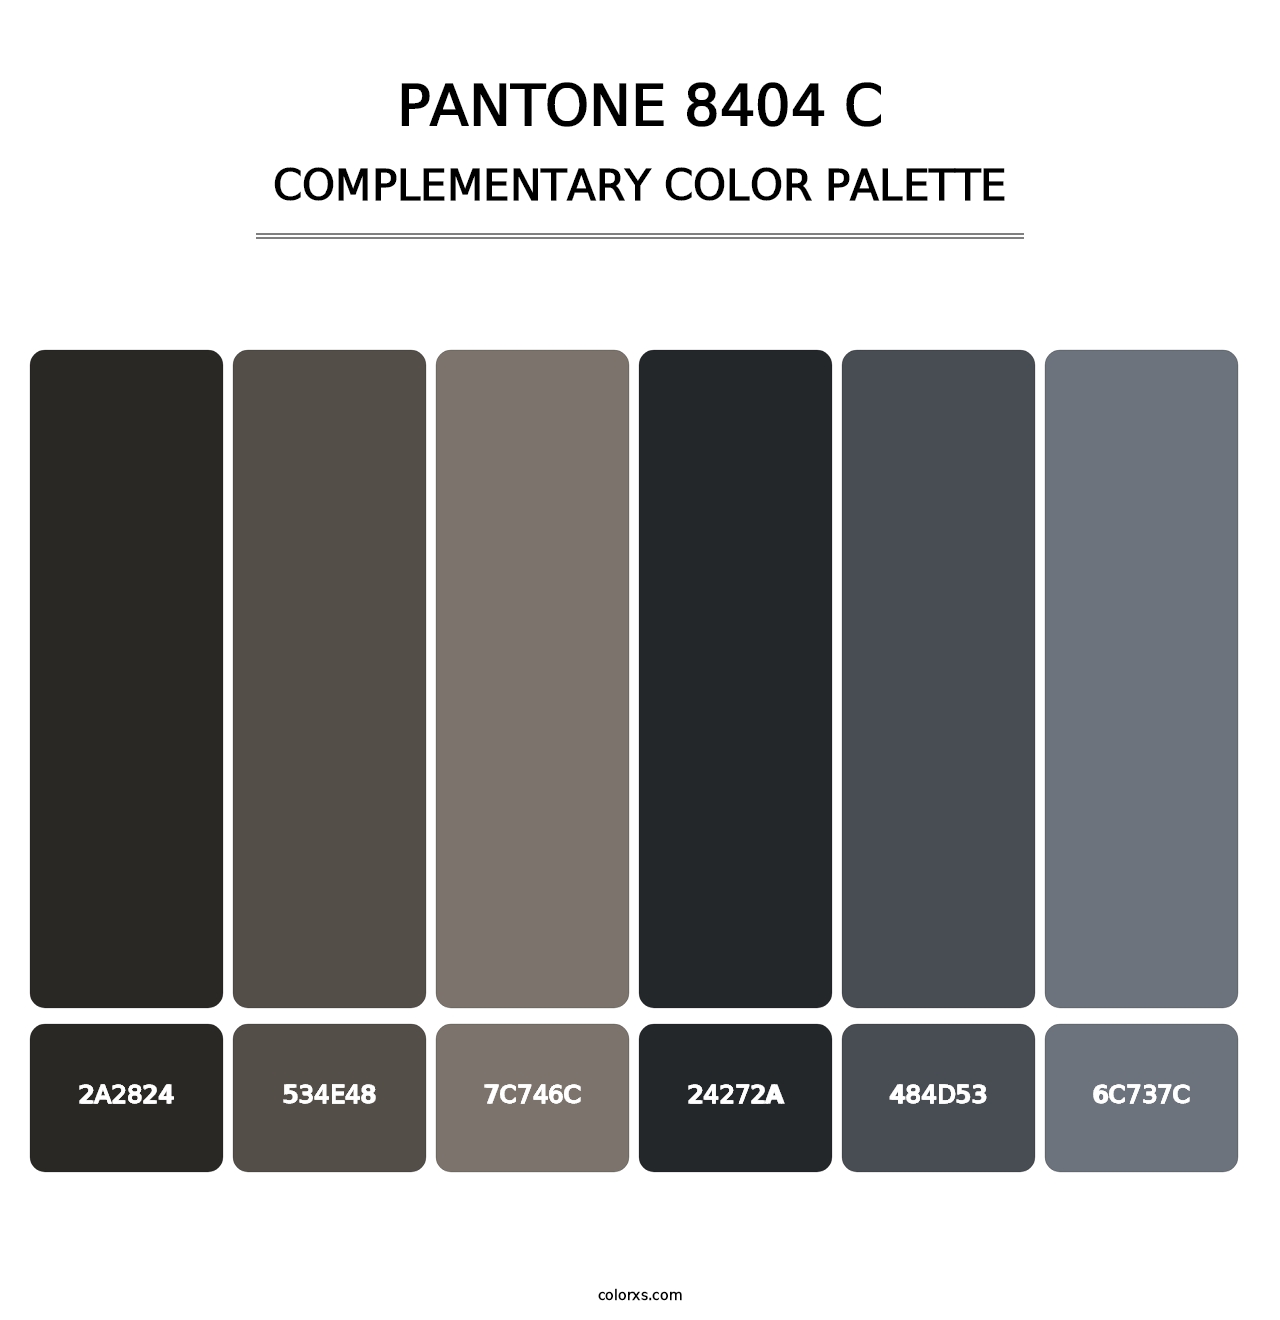 PANTONE 8404 C - Complementary Color Palette